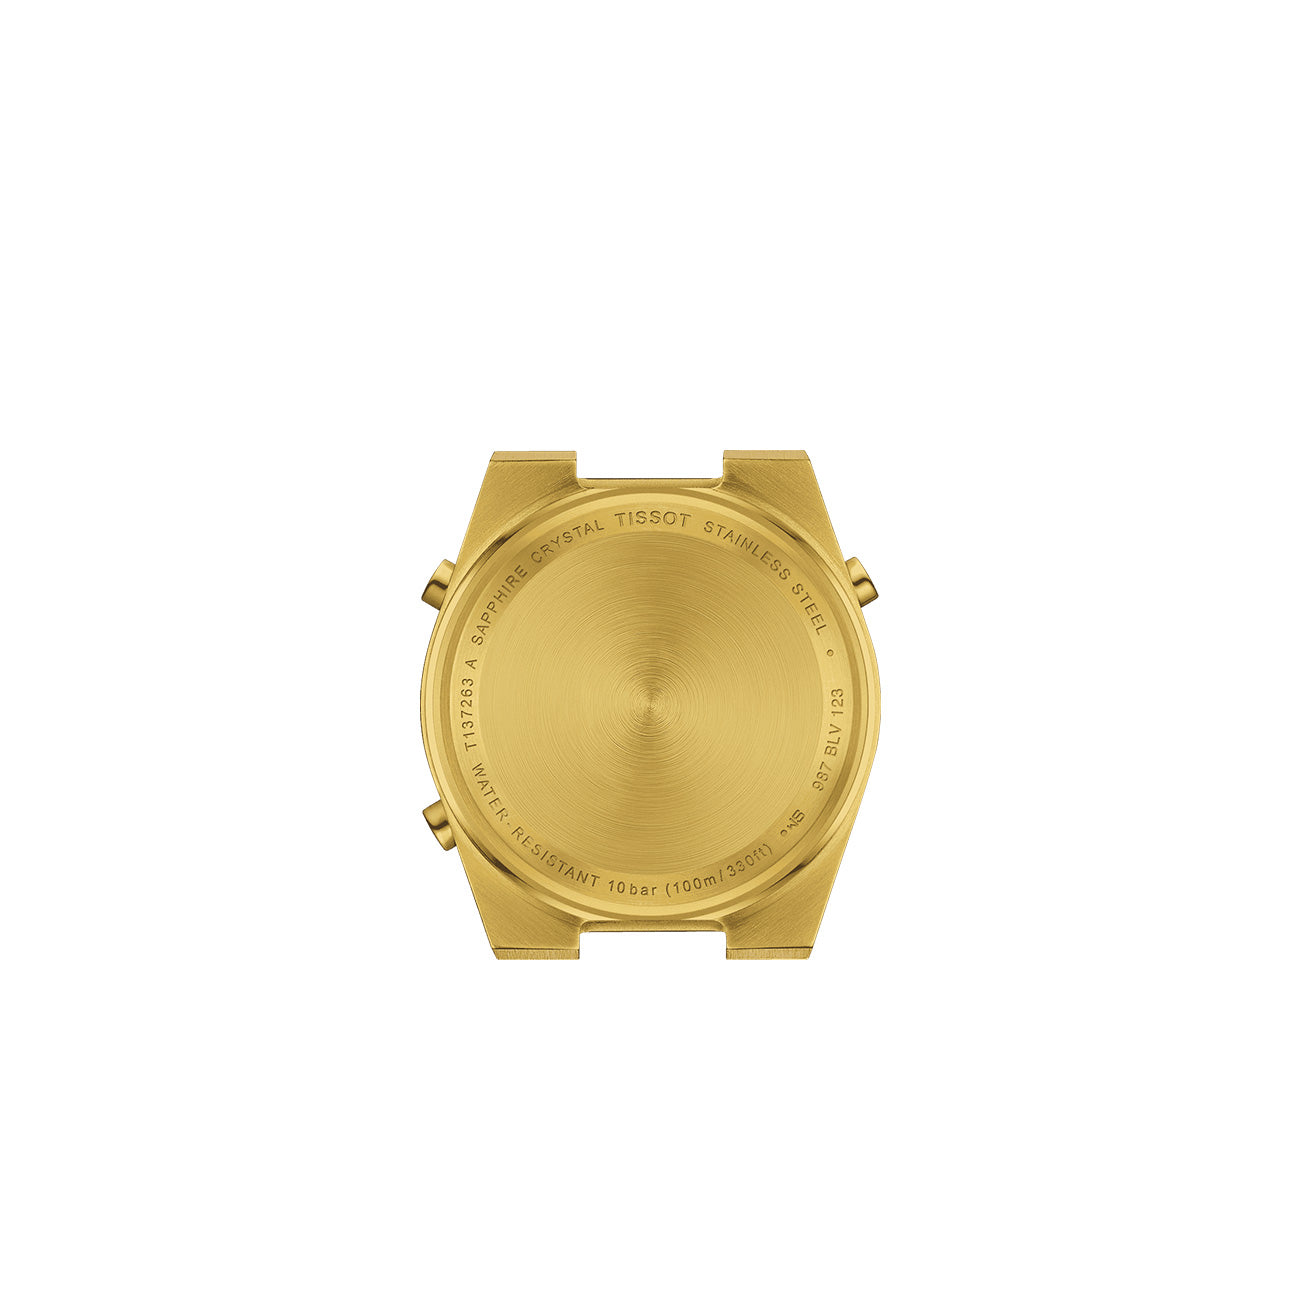 Tissot PRX Women's 35mm Digital Watch T137.263.33.020.00